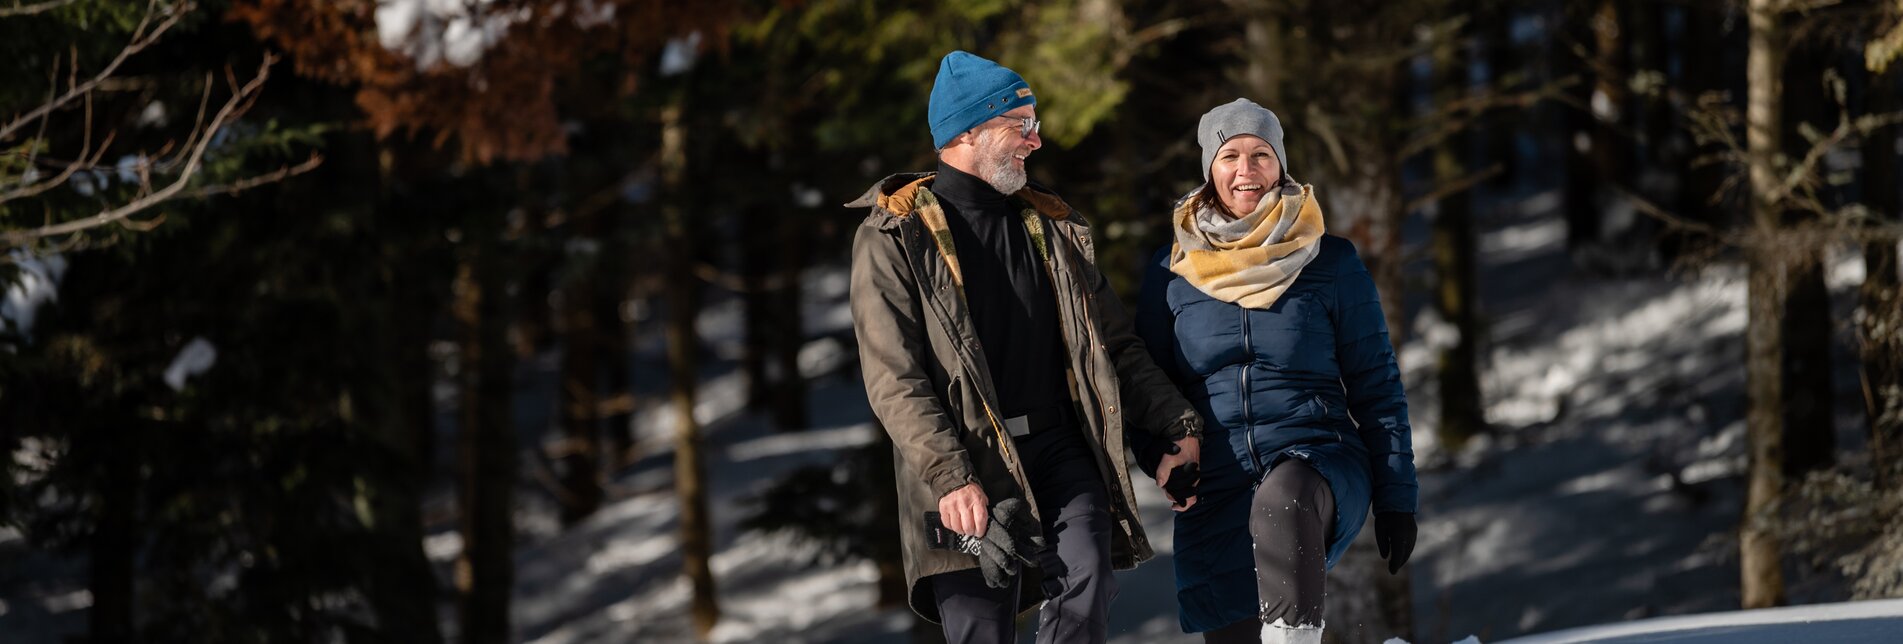 Couple on winter walk | Klaus Ranger | © TV Oststeiermark / Klaus Ranger